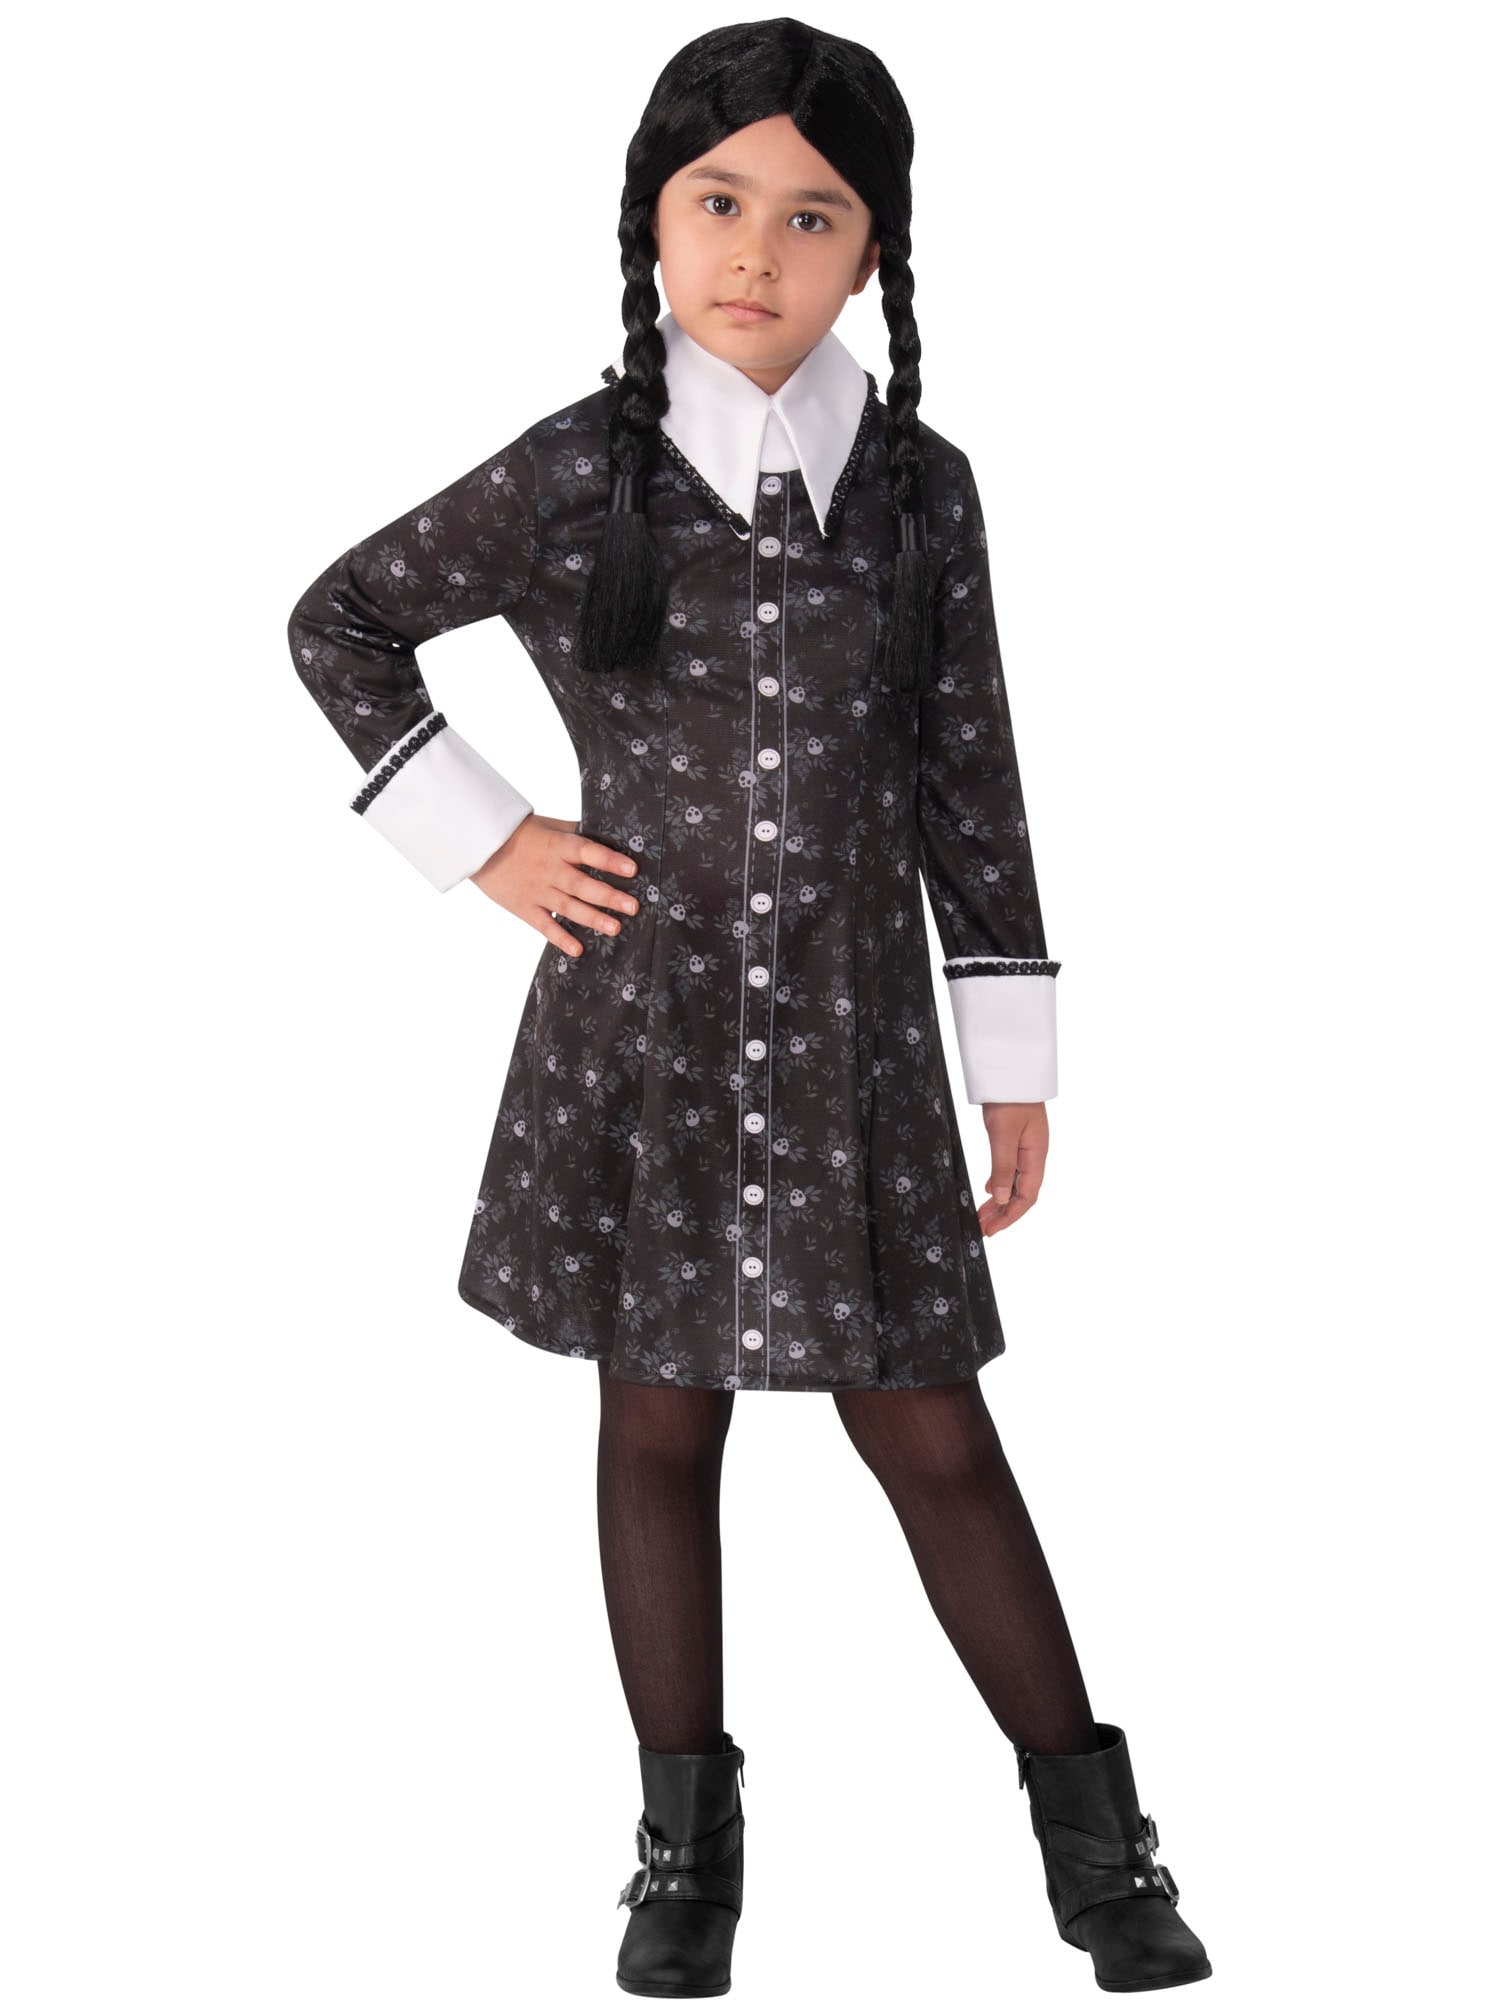  Digi Halloween Wednesday Addams Costume Girls Dress